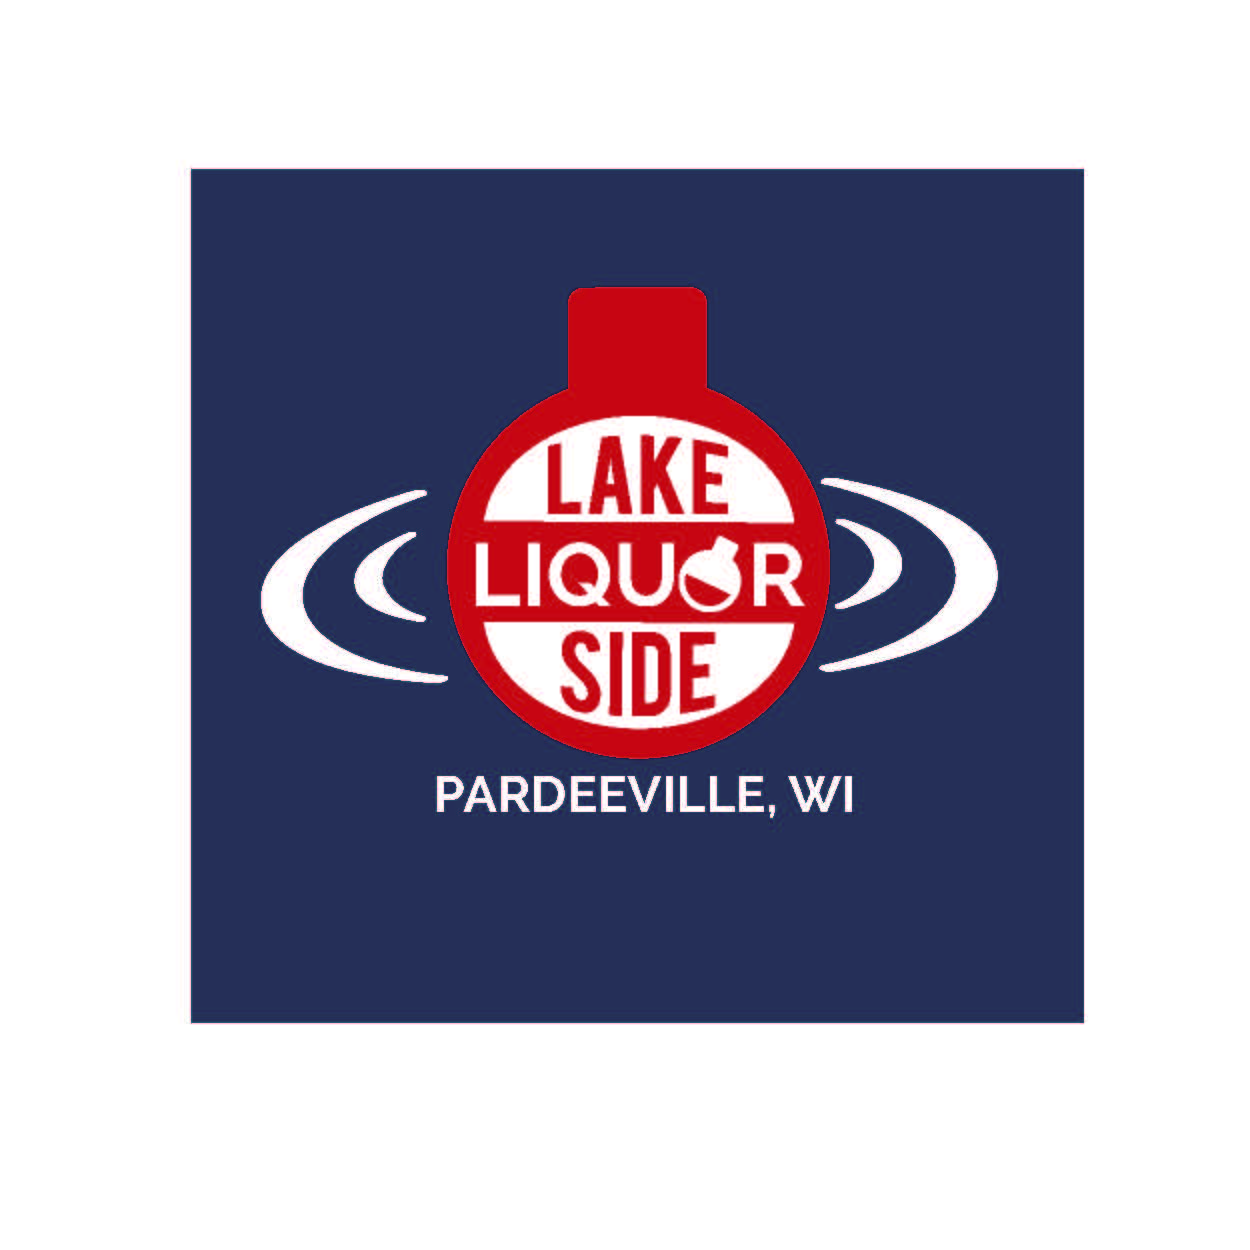 https://www.pardeevilleboysclub.org/wp-content/uploads/sites/3195/2022/06/lake_liquor_side_shirt.jpg